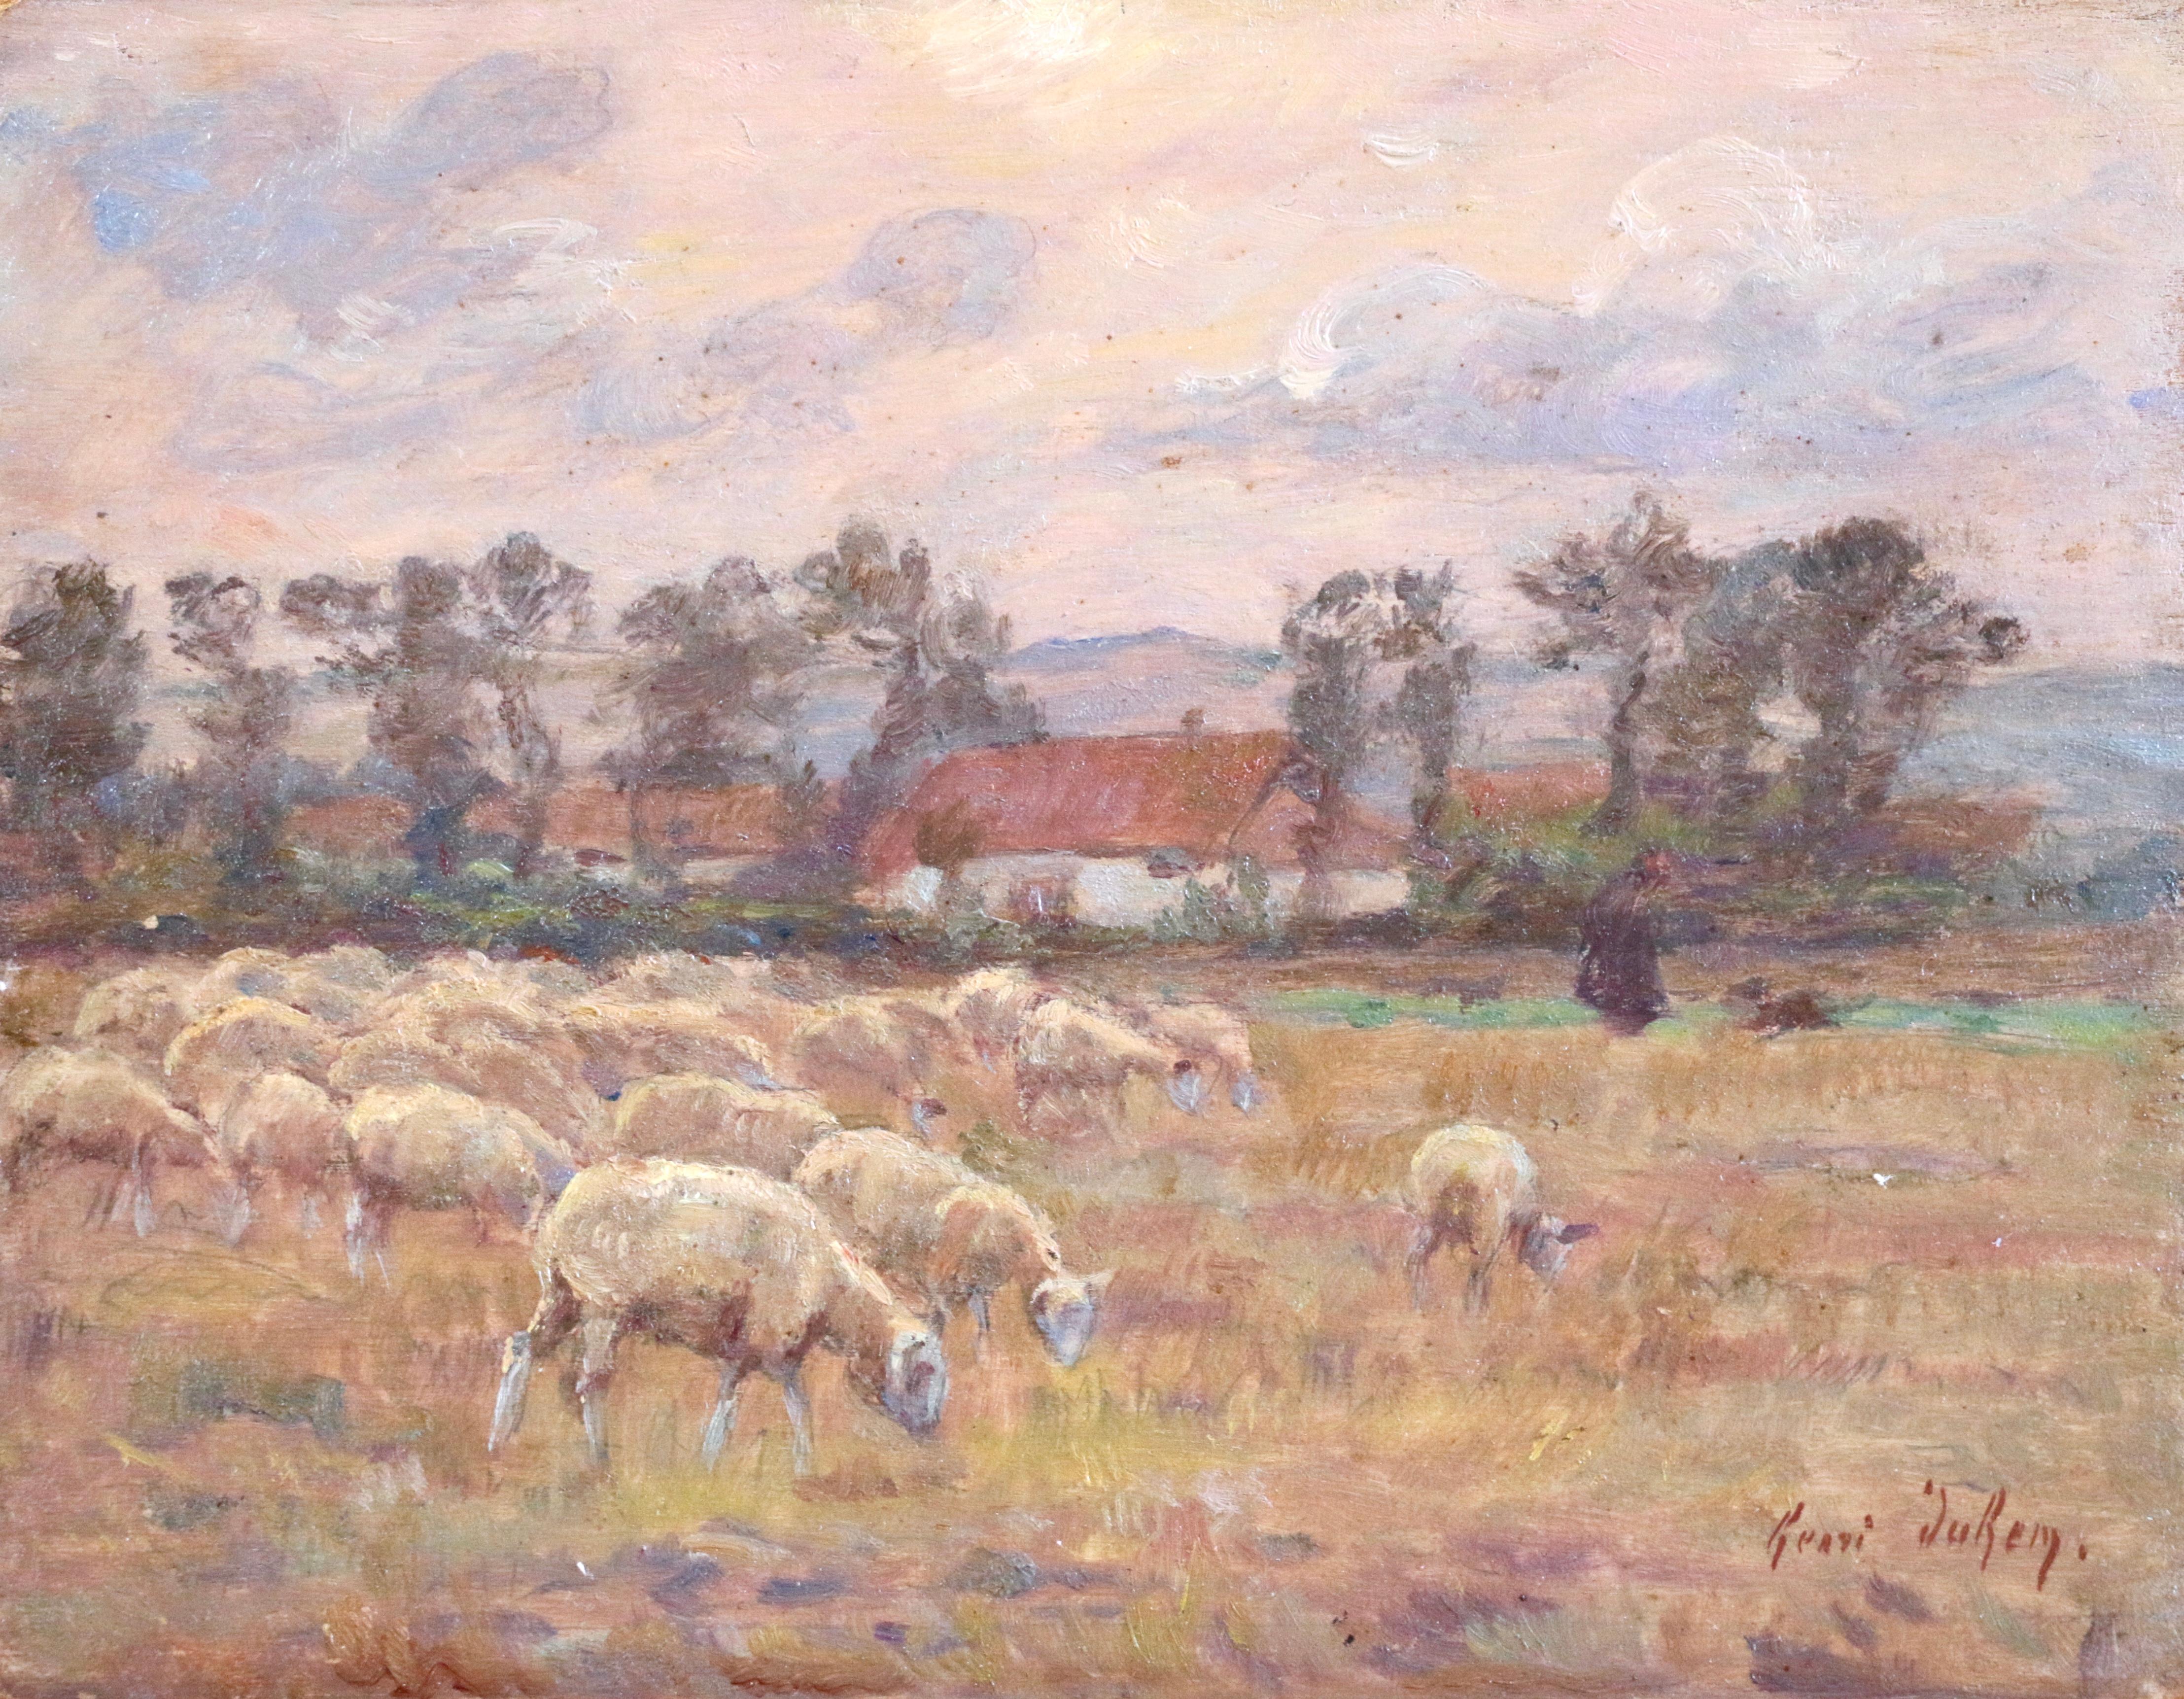 Henri Duhem Landscape Painting – Shepherd and his Flock - 19th Century Oil, Sheep & Figure in Landscape by Duhem